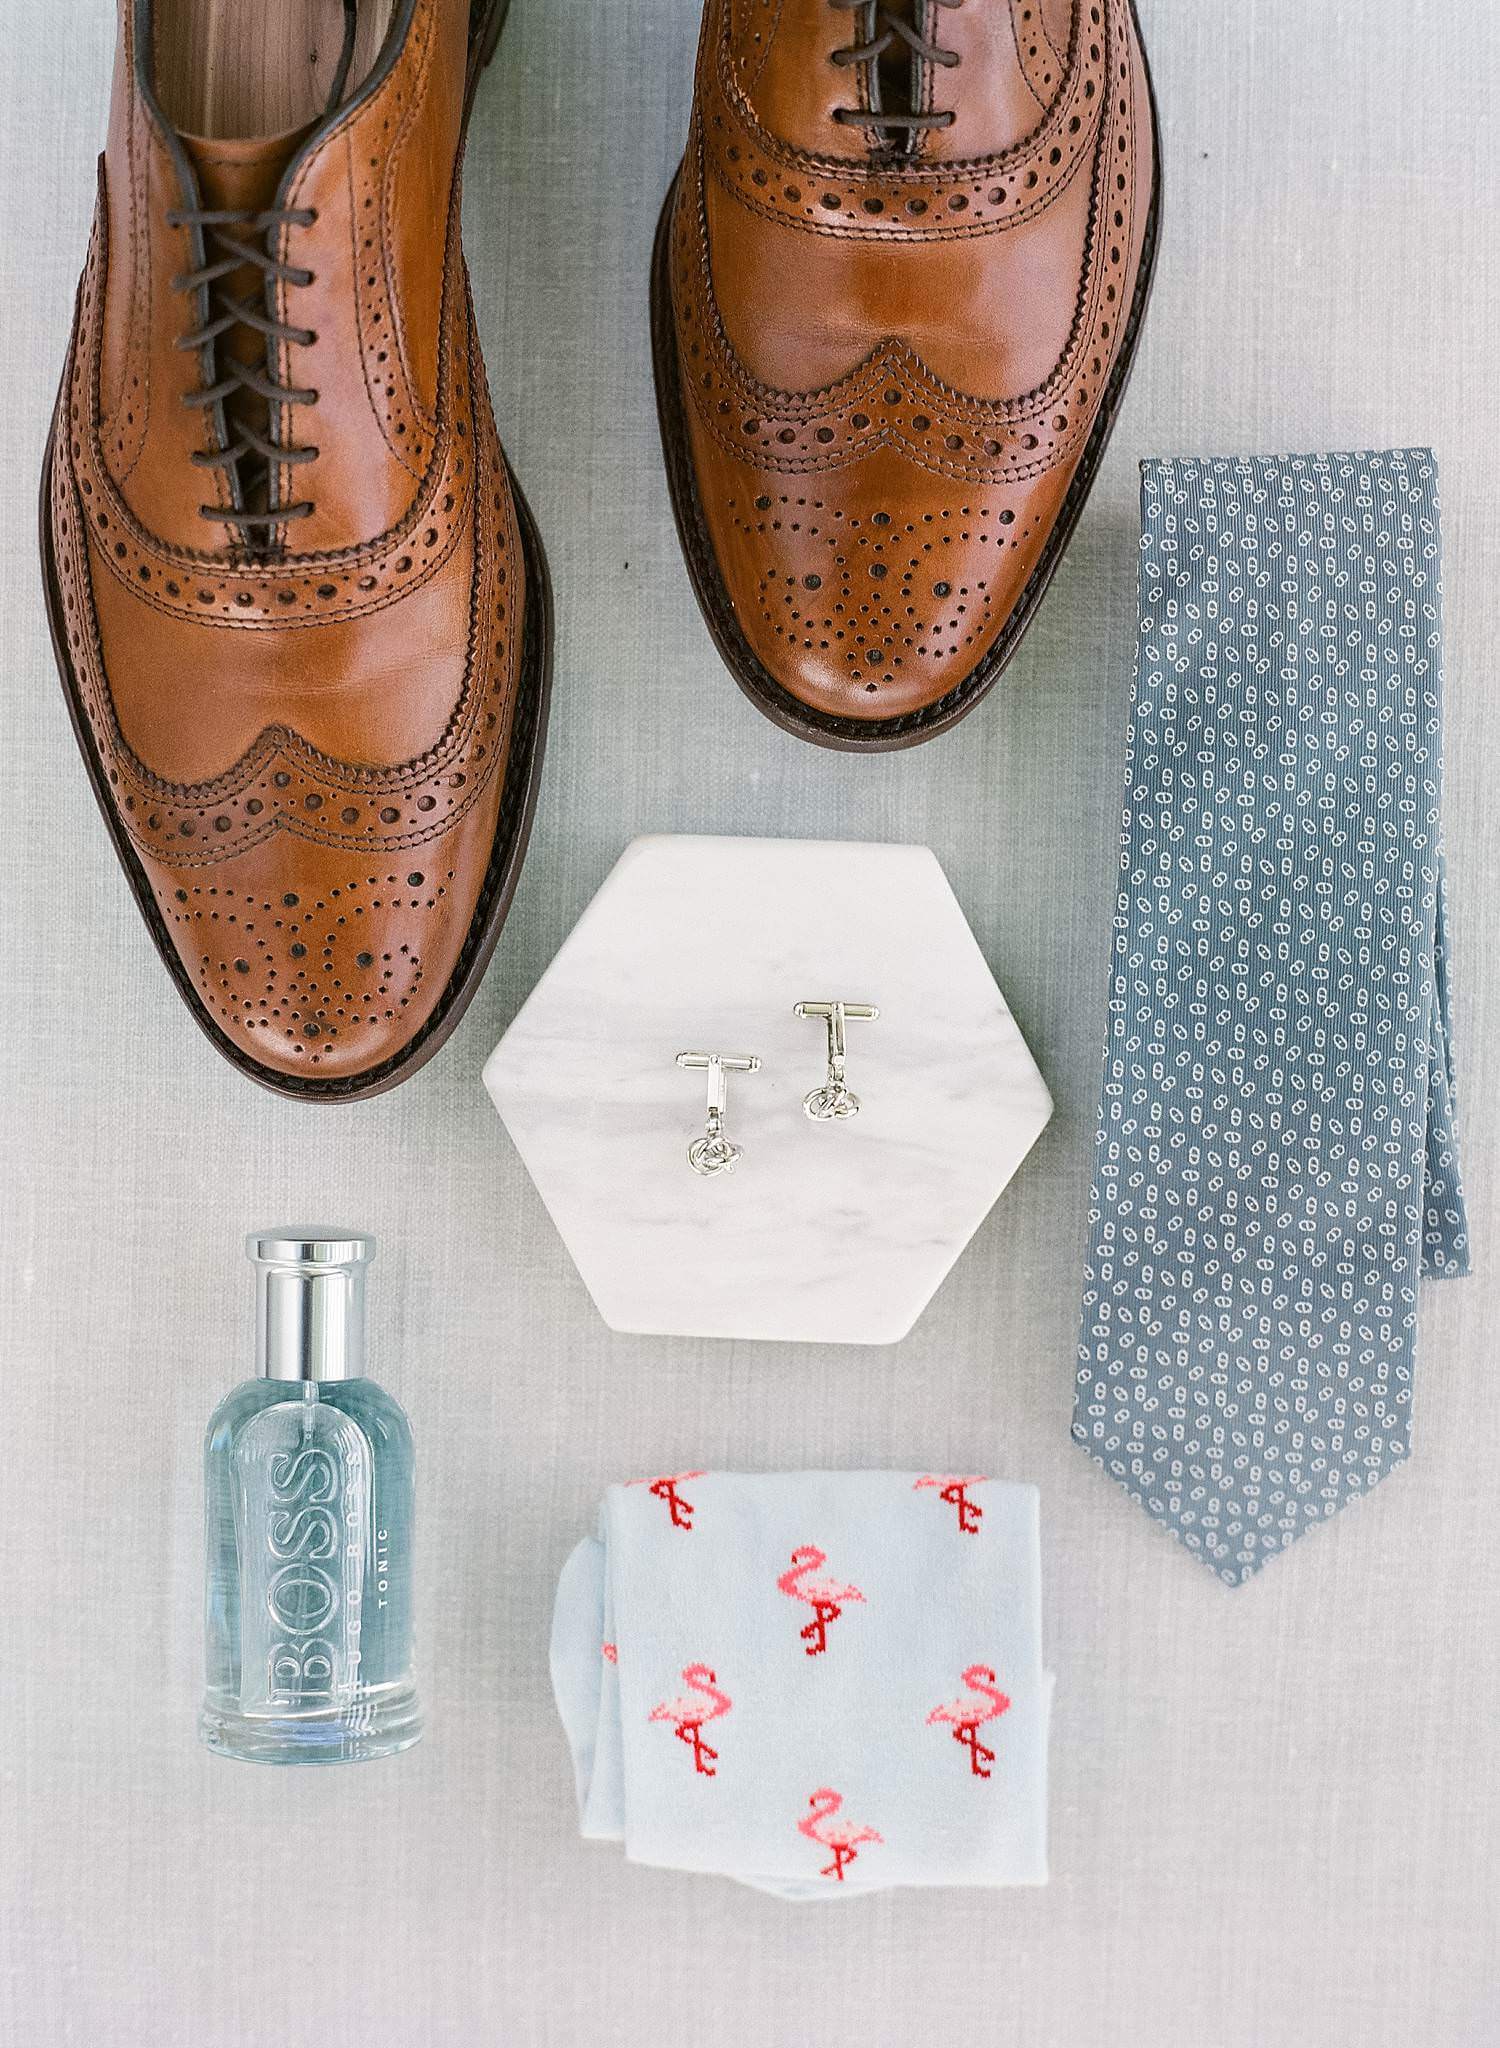 Groom's details. Cufflinks, Hermes tie, Hugo boss cologne, party socks